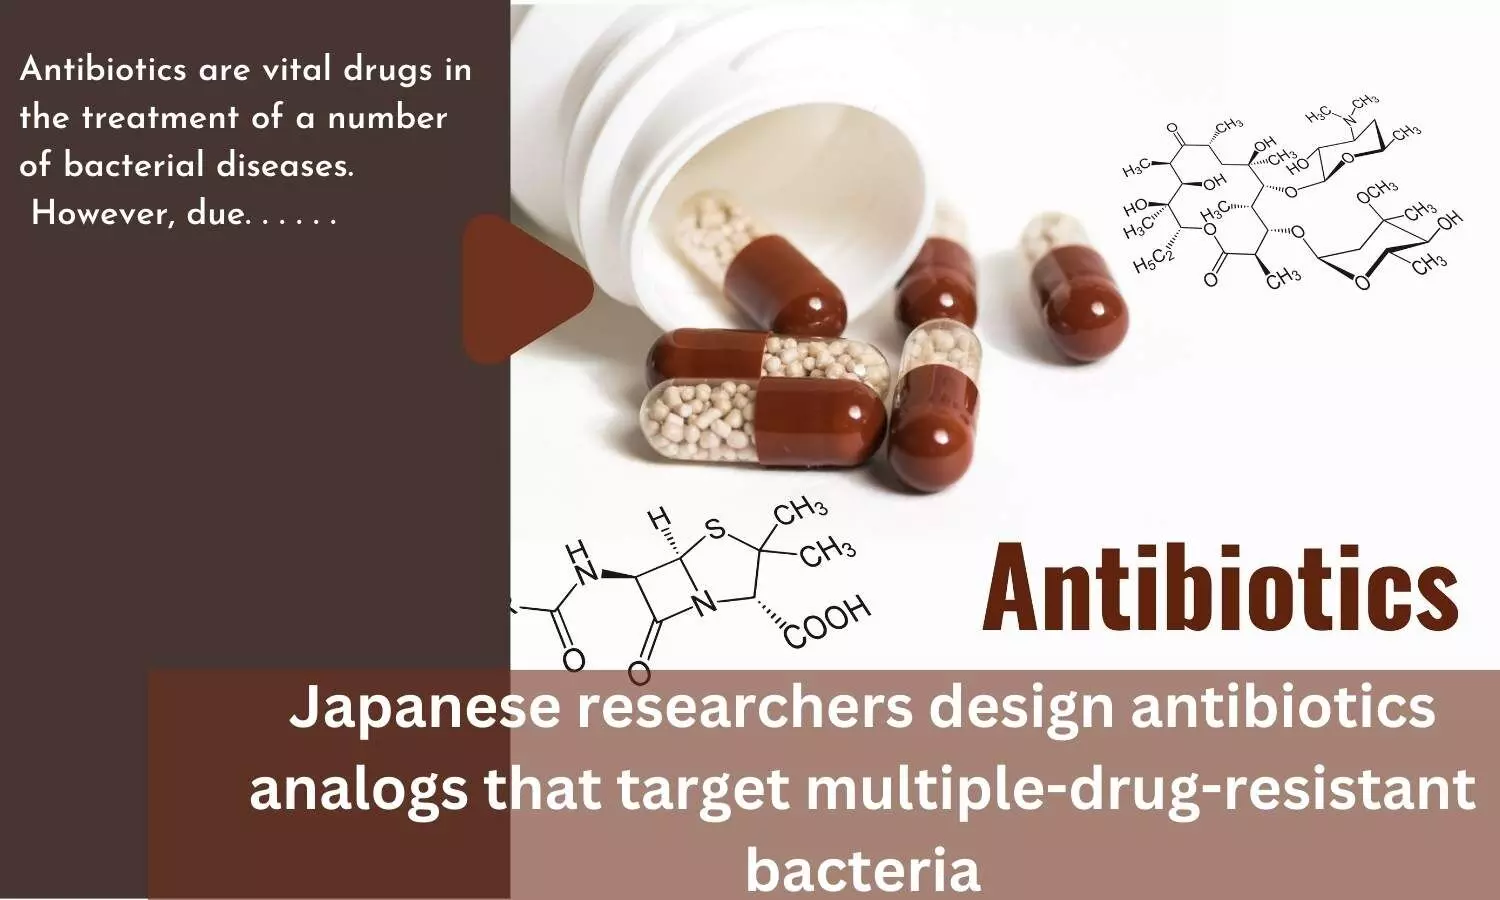 Japanese researchers design antibiotics analogs that target multiple-drug-resistant bacteria